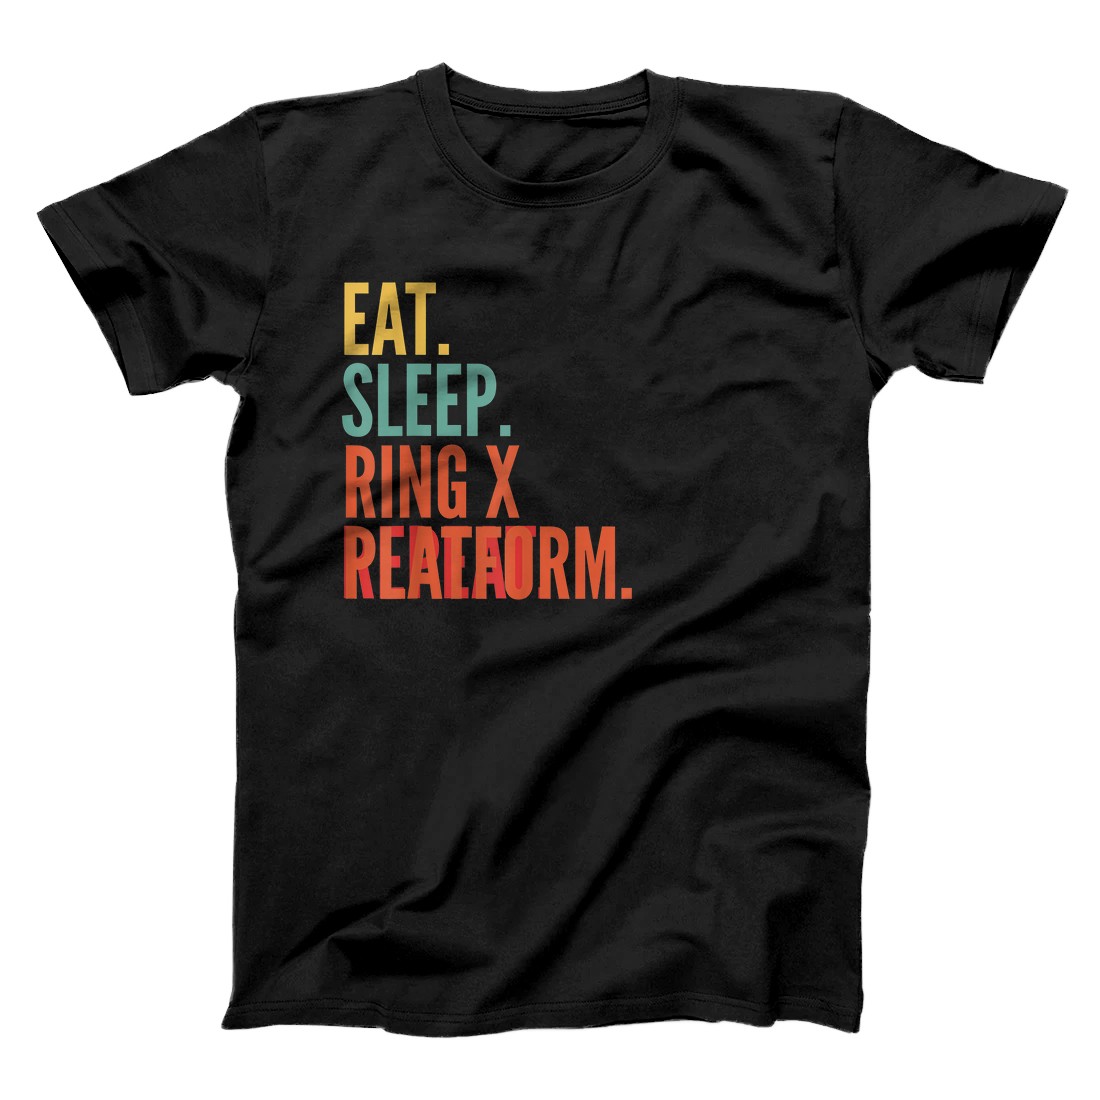 Personalized Ring X Platform Crypto, Eat Sleep Ring X Platform Repeat T-Shirt